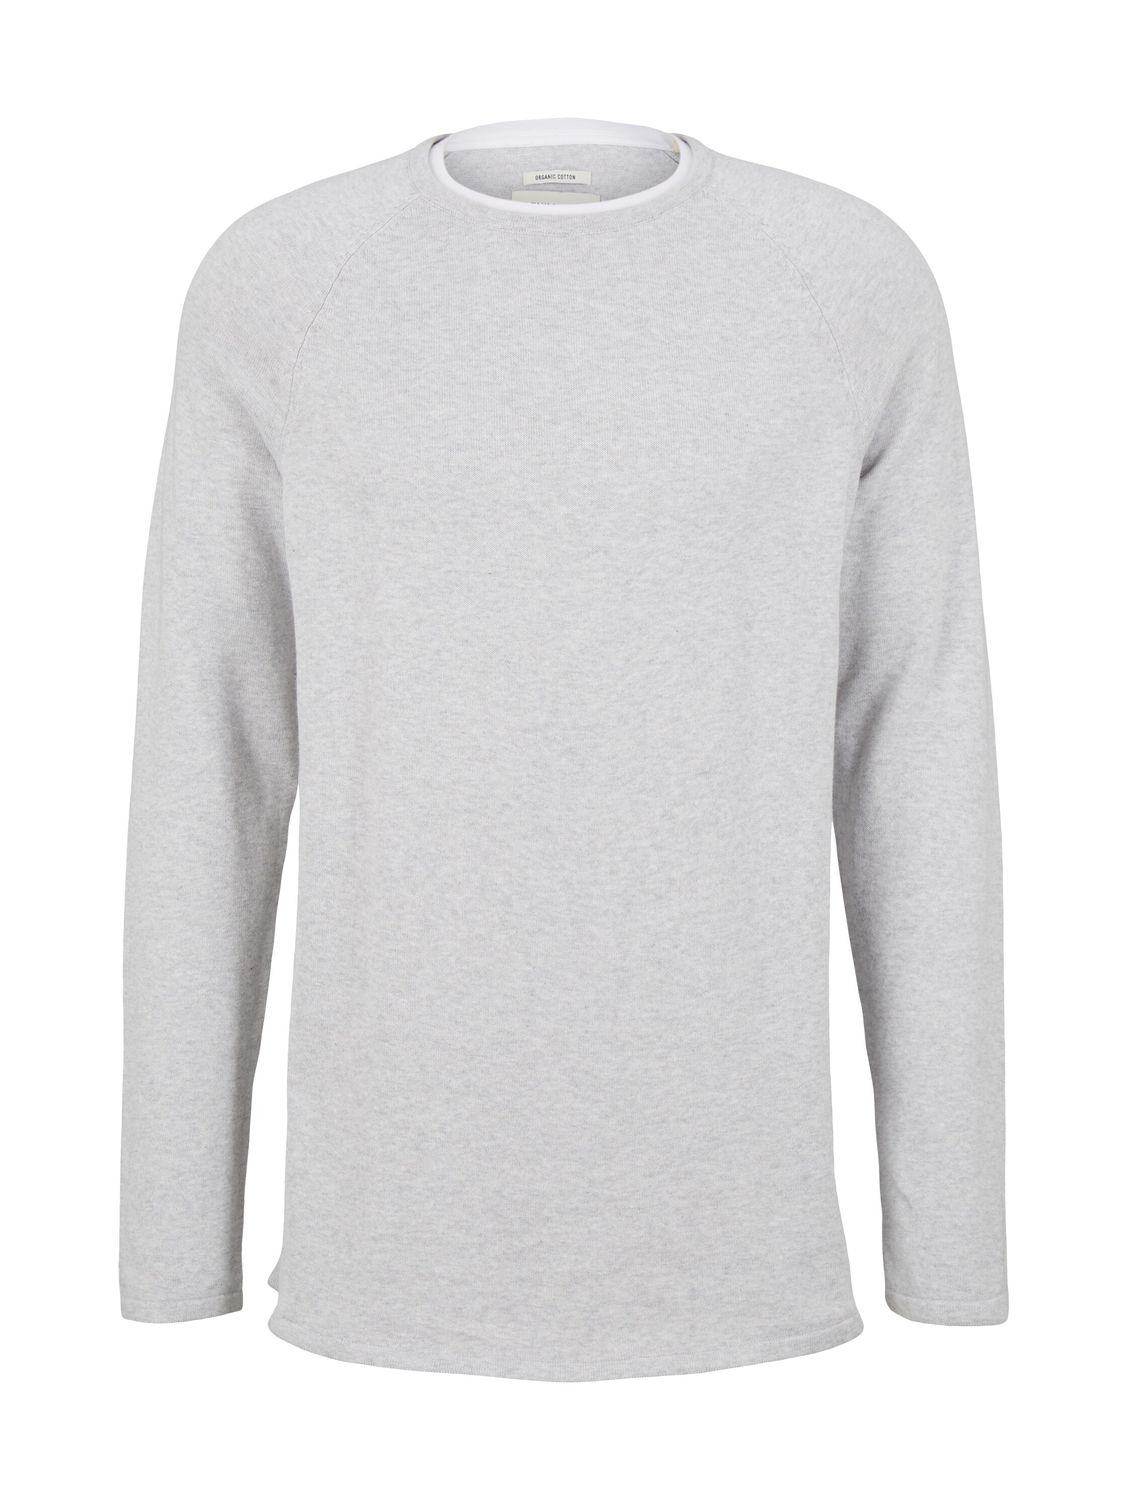 Пуловер TOM TAILOR Denim BASIC, серый пуловер tom tailor denim structured basic серый